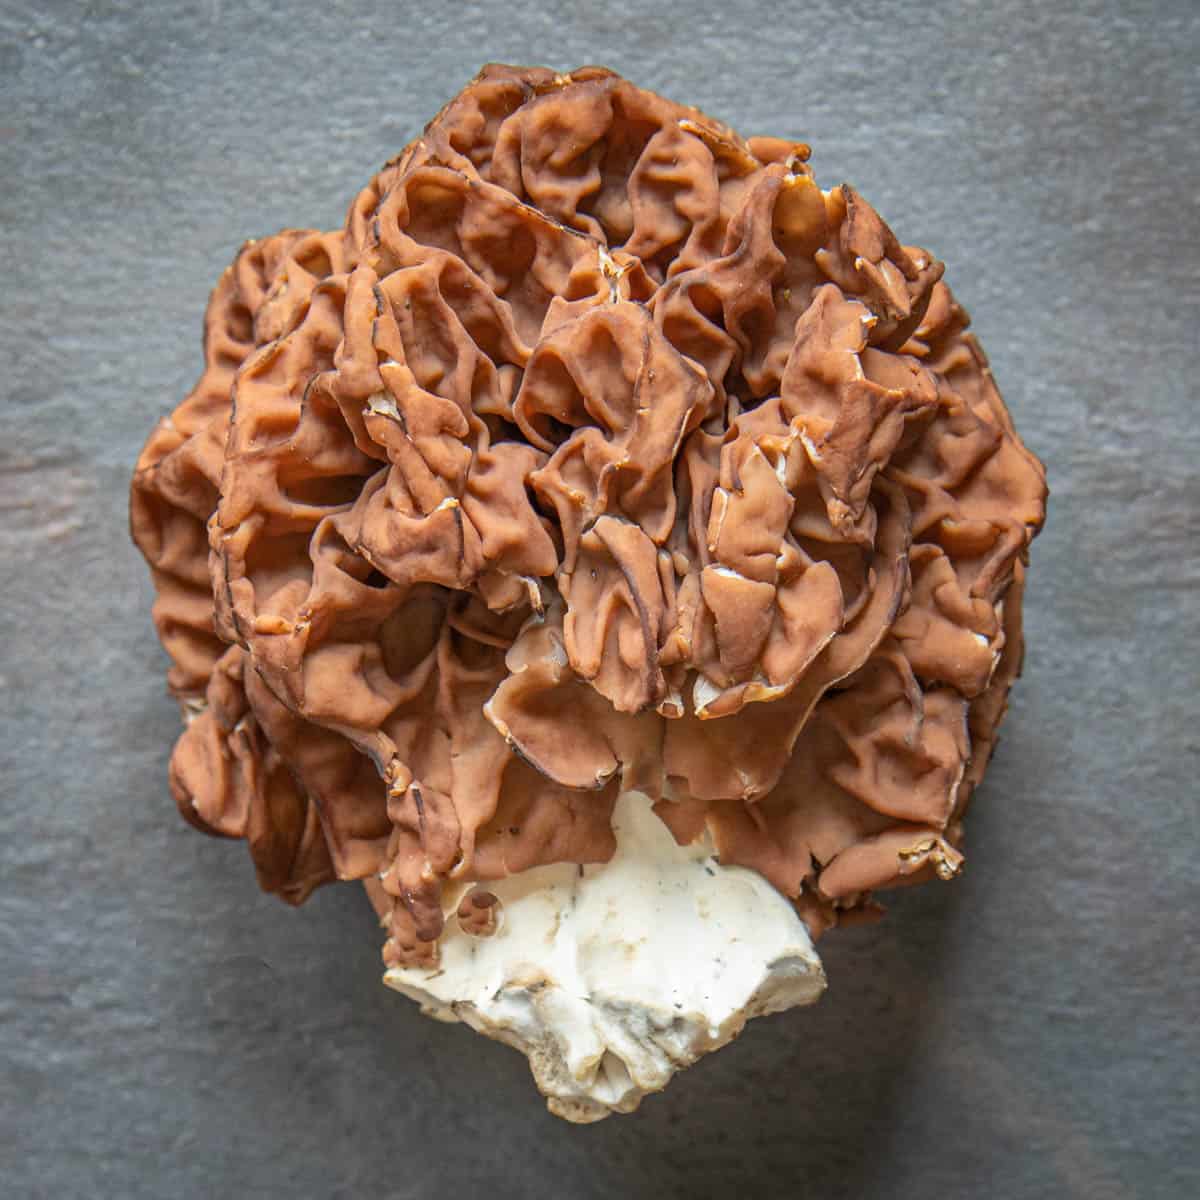 Gyromitra caroliniana are large, handsome mushrooms. 